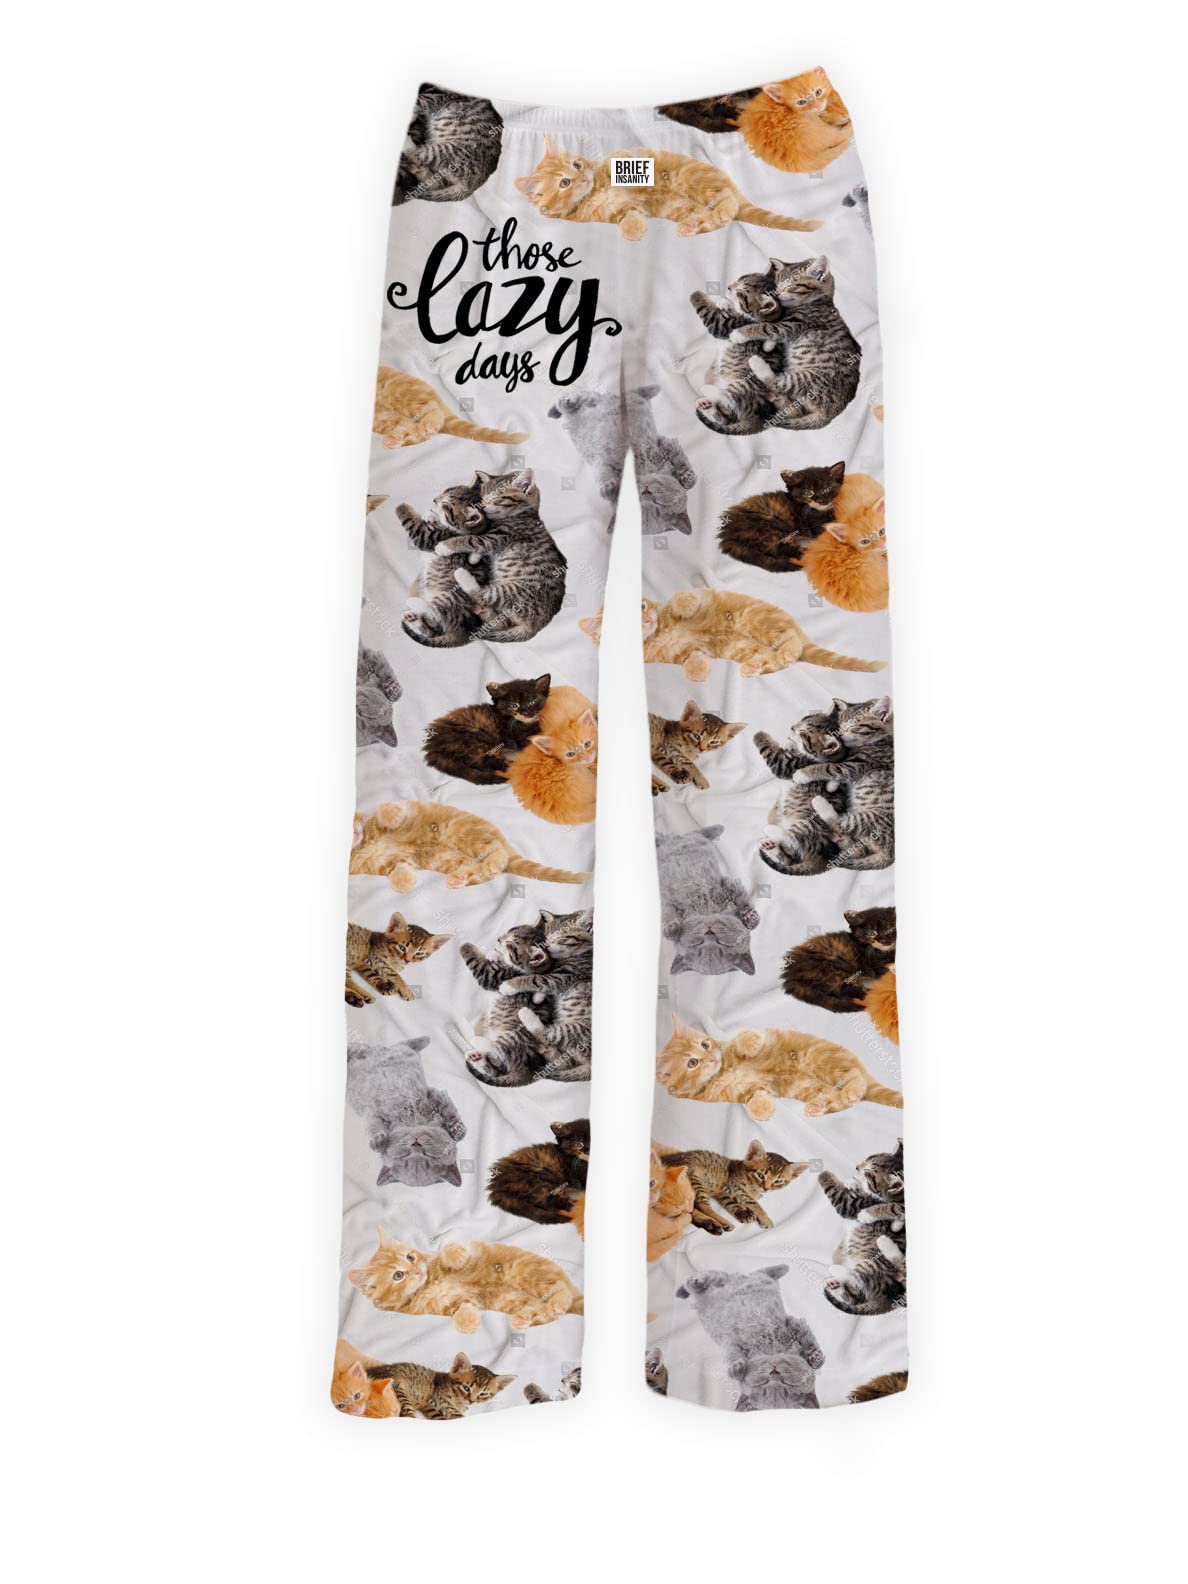 BRIEF INSANITY Those Lazy Days Cat Themed Pajama Pants